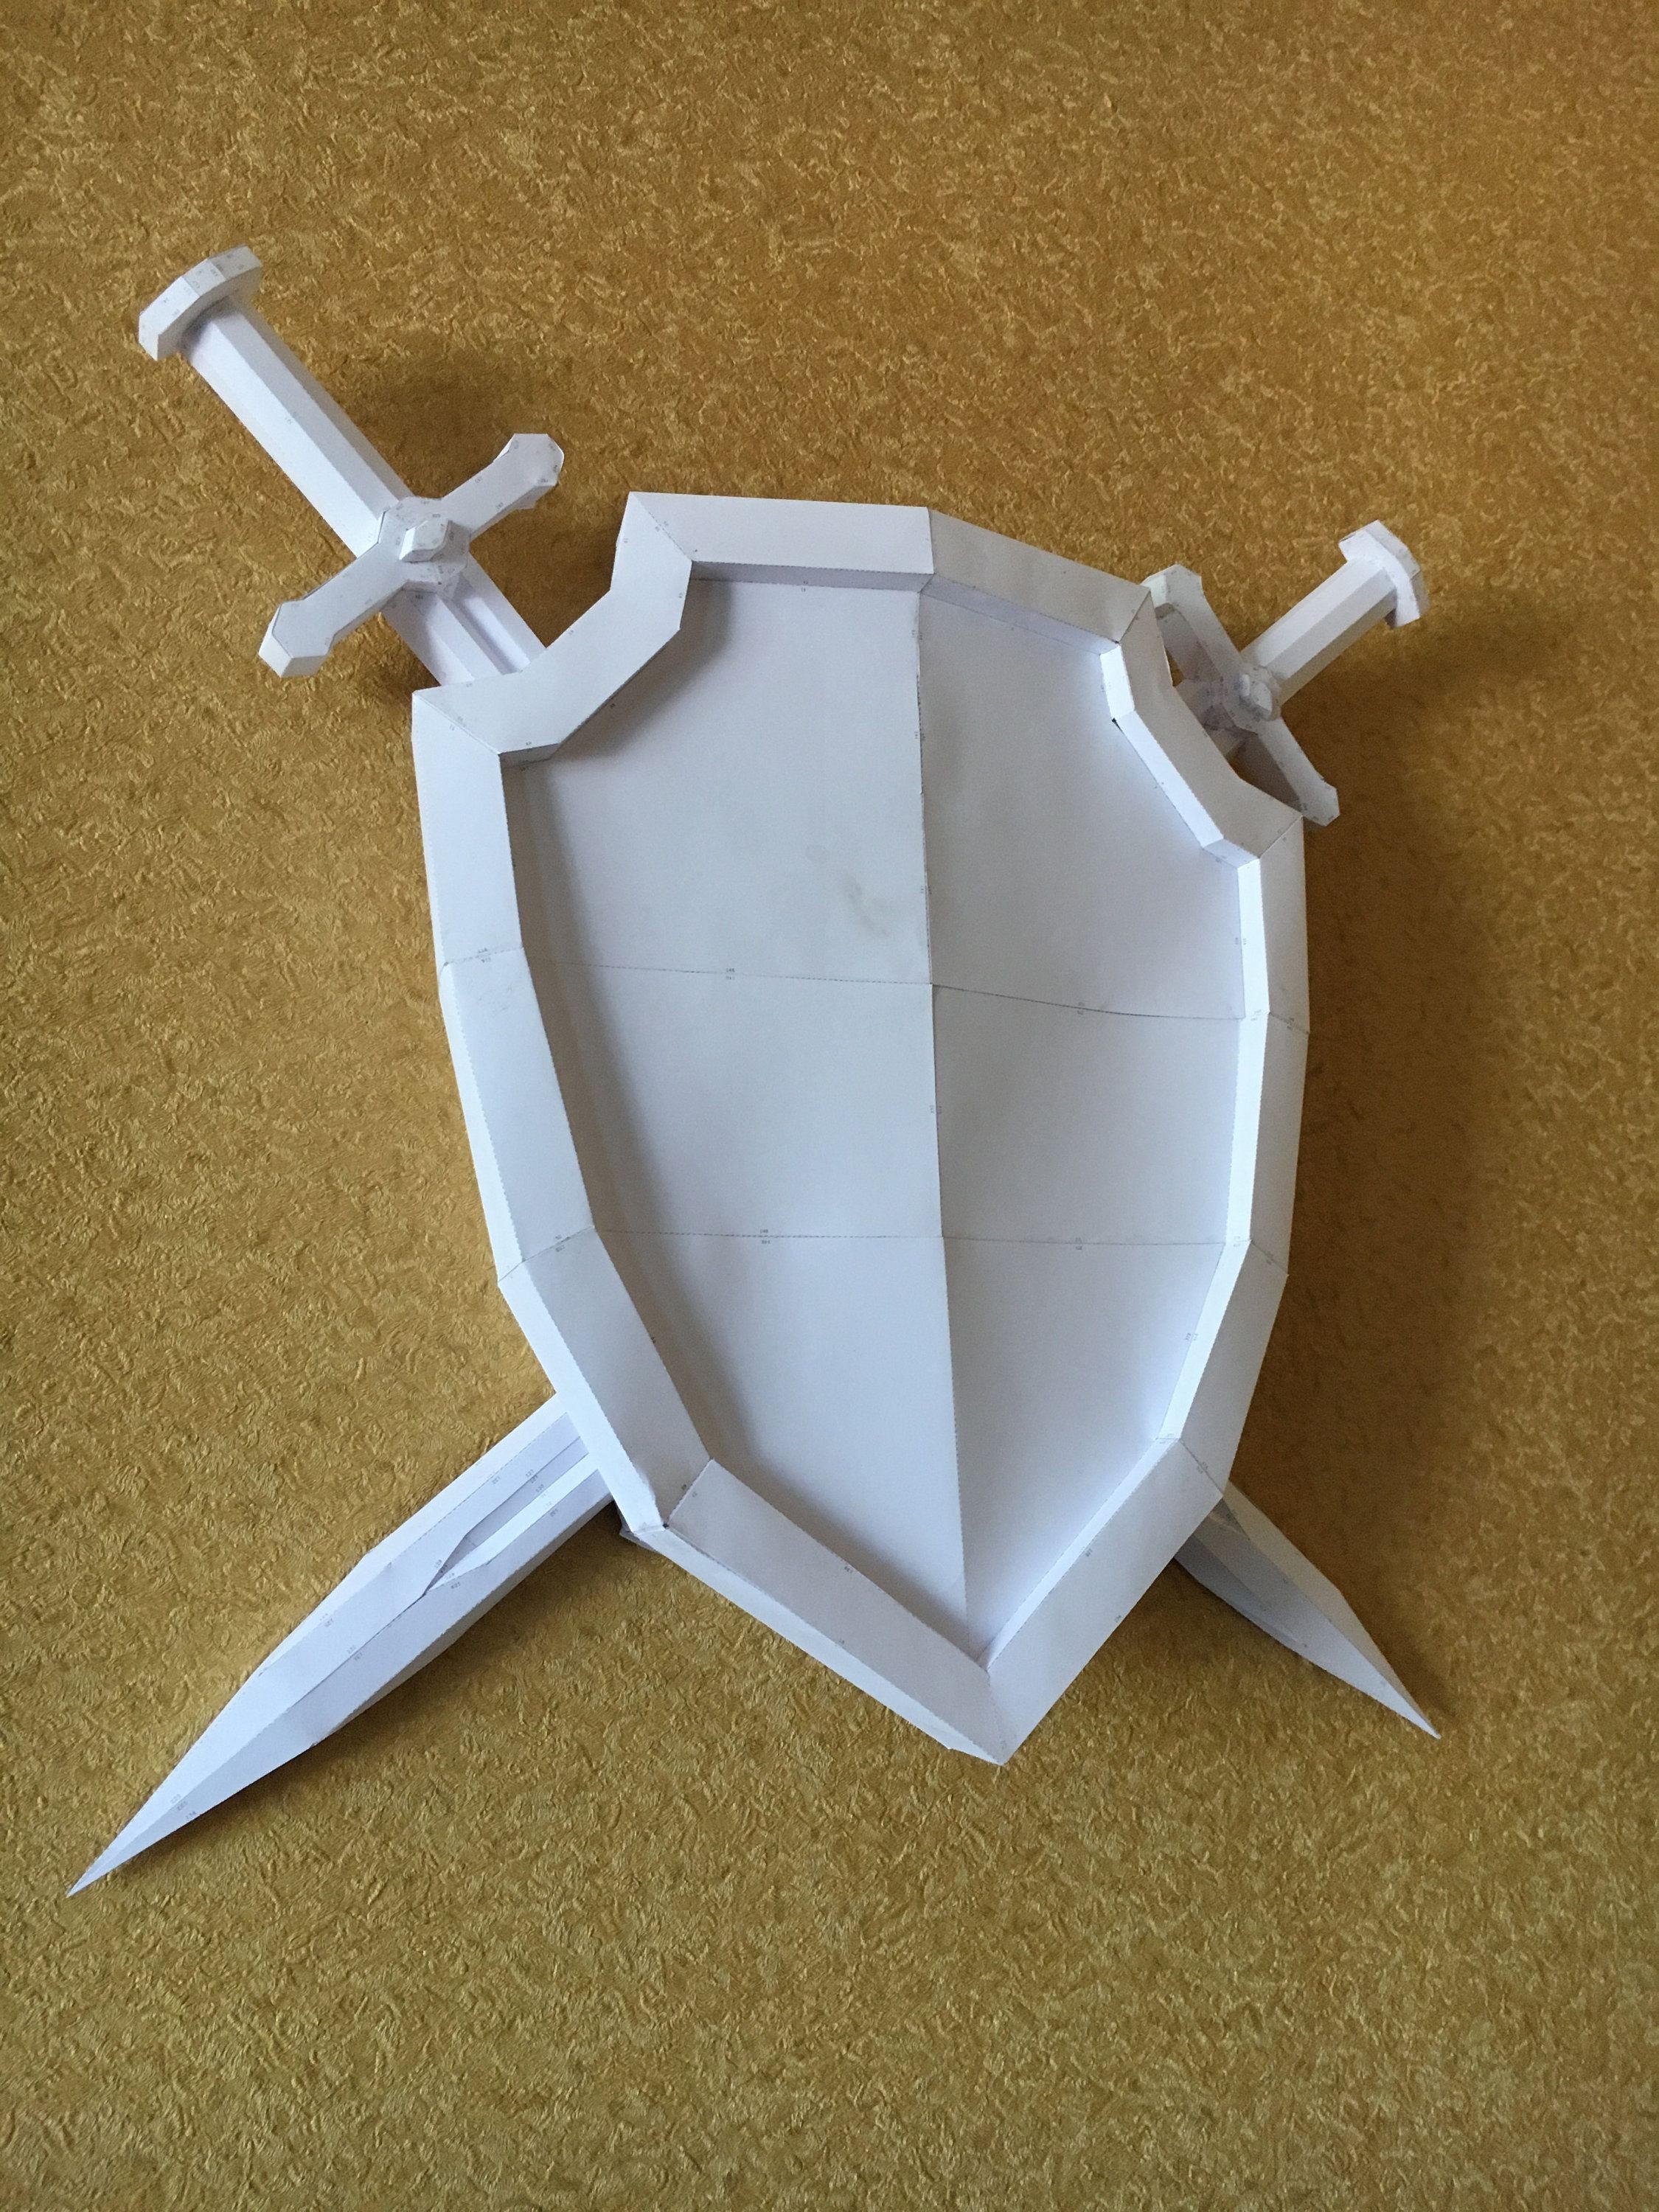 Papercraft Model Sword Shield Diy Papercraft Model ÐÑÐ¼Ð°Ð¶Ð½ÑÐµ Ð¸Ð·Ð´ÐµÐ Ð¸Ñ